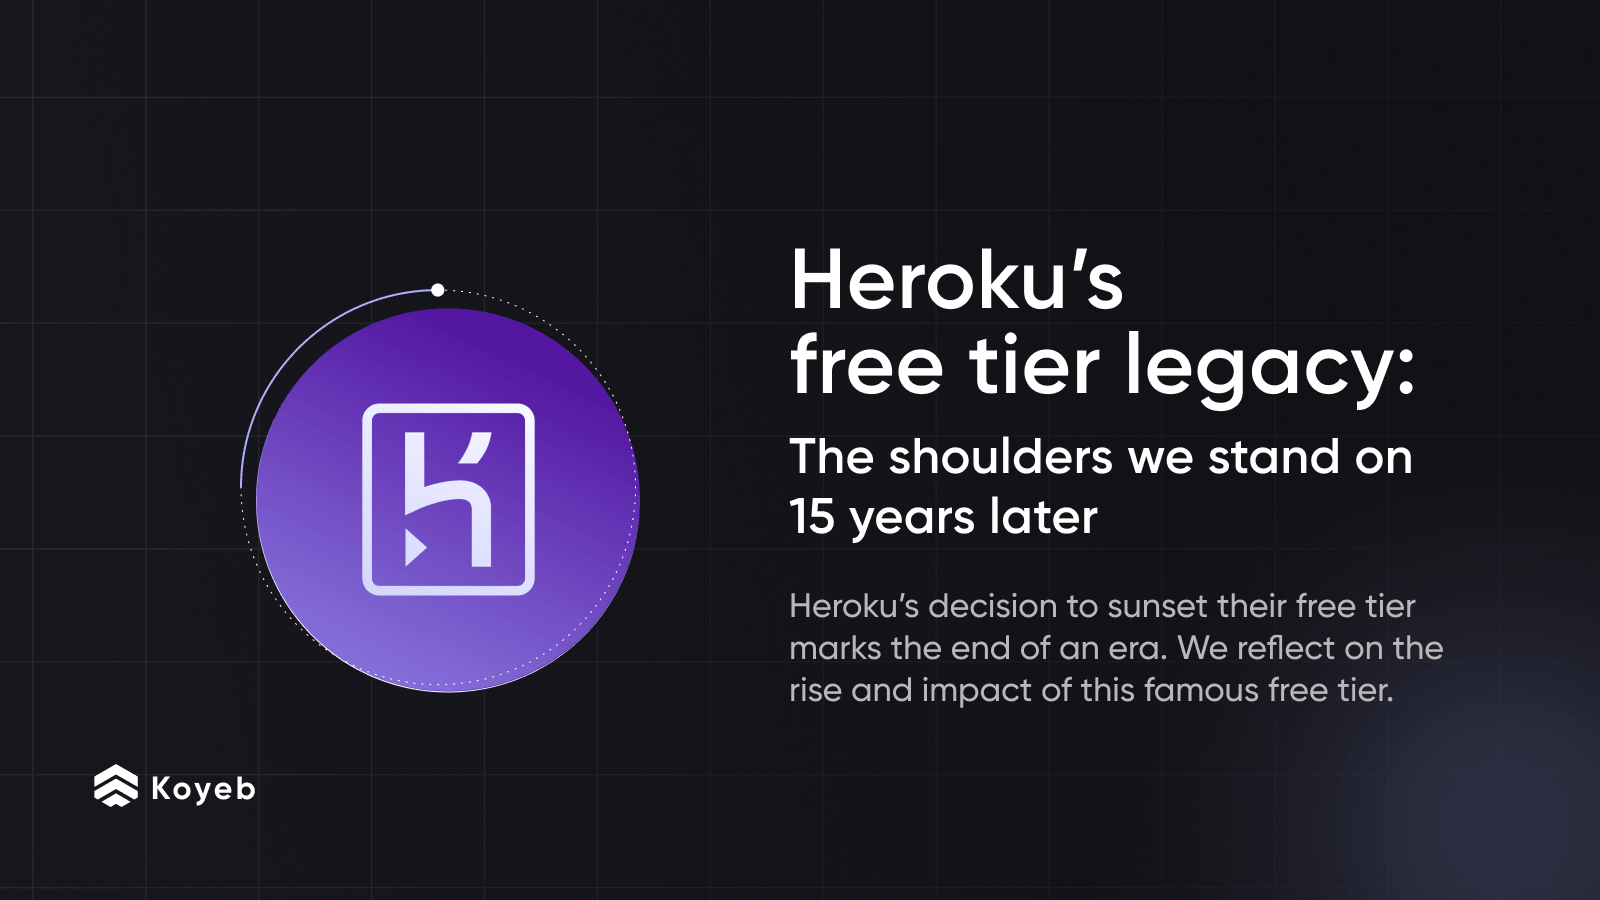 Heroku's free tier legacy: The shoulders we stand on 15 years